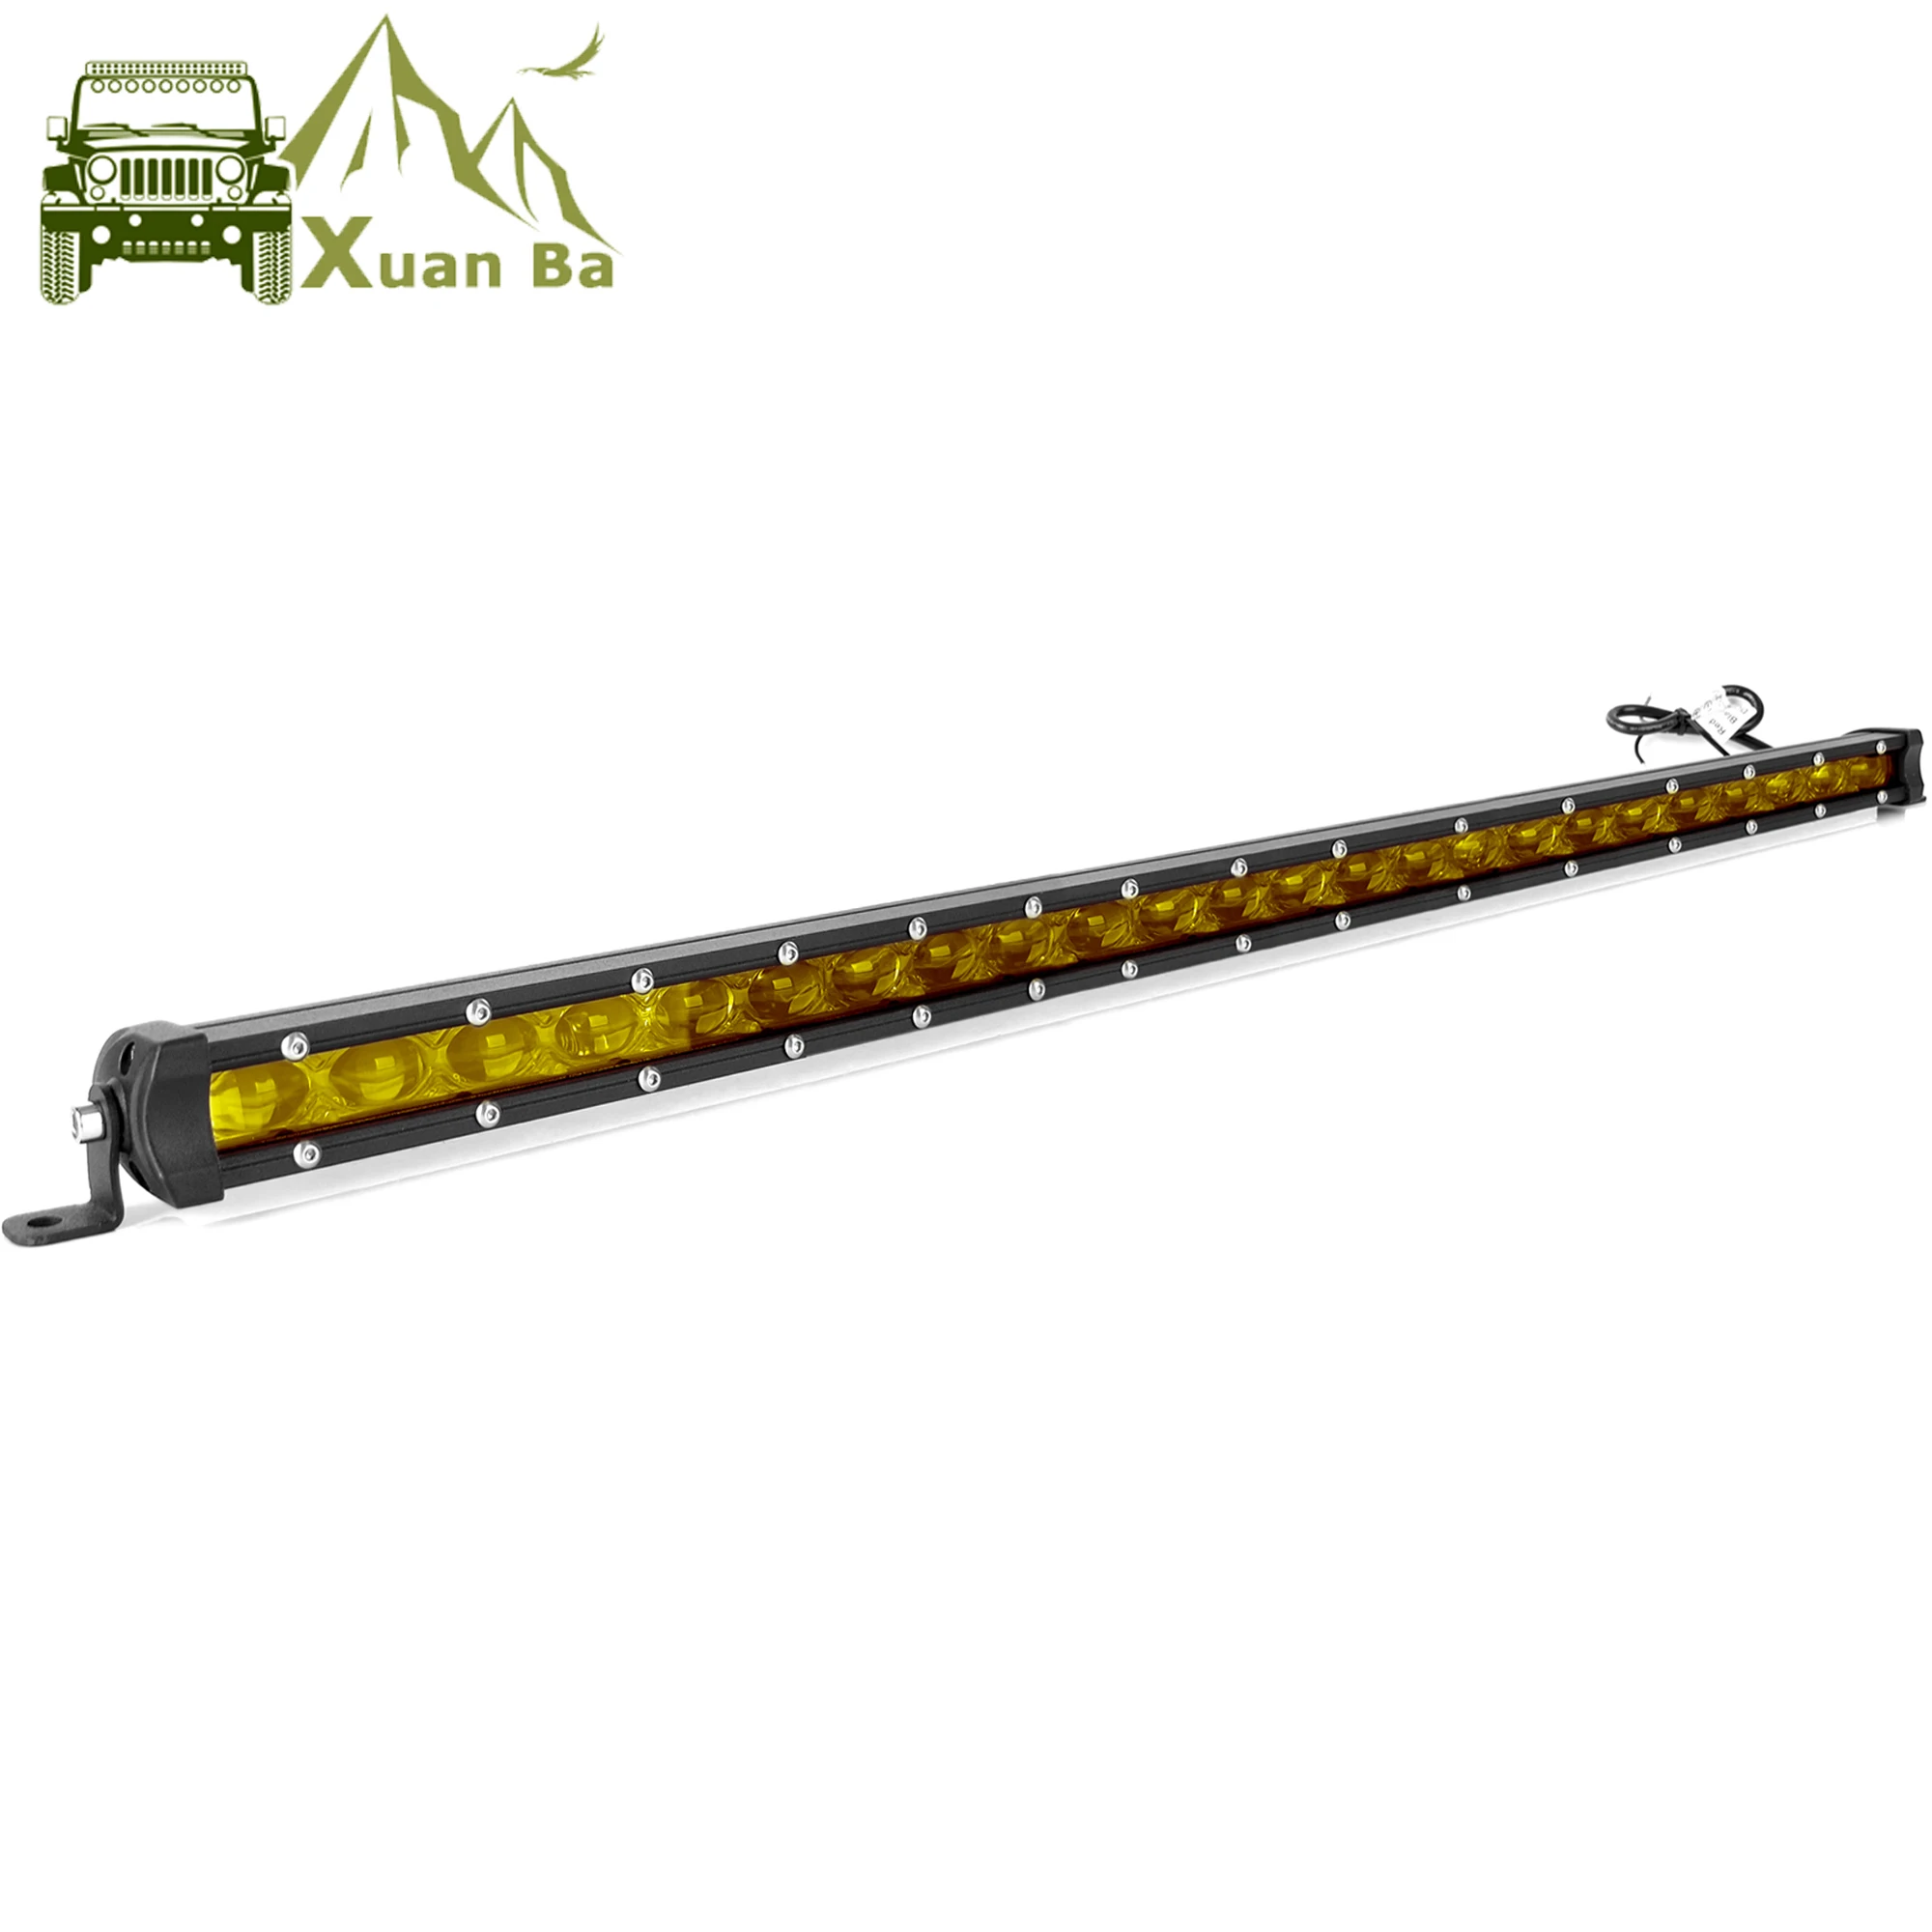 

1PCS Led Light Bar Offroad 4x4 For Car 12V 24V Uaz ATV 4WD Truck Tractor Boat Lada Niva Spotlight Driving Barra Lamp